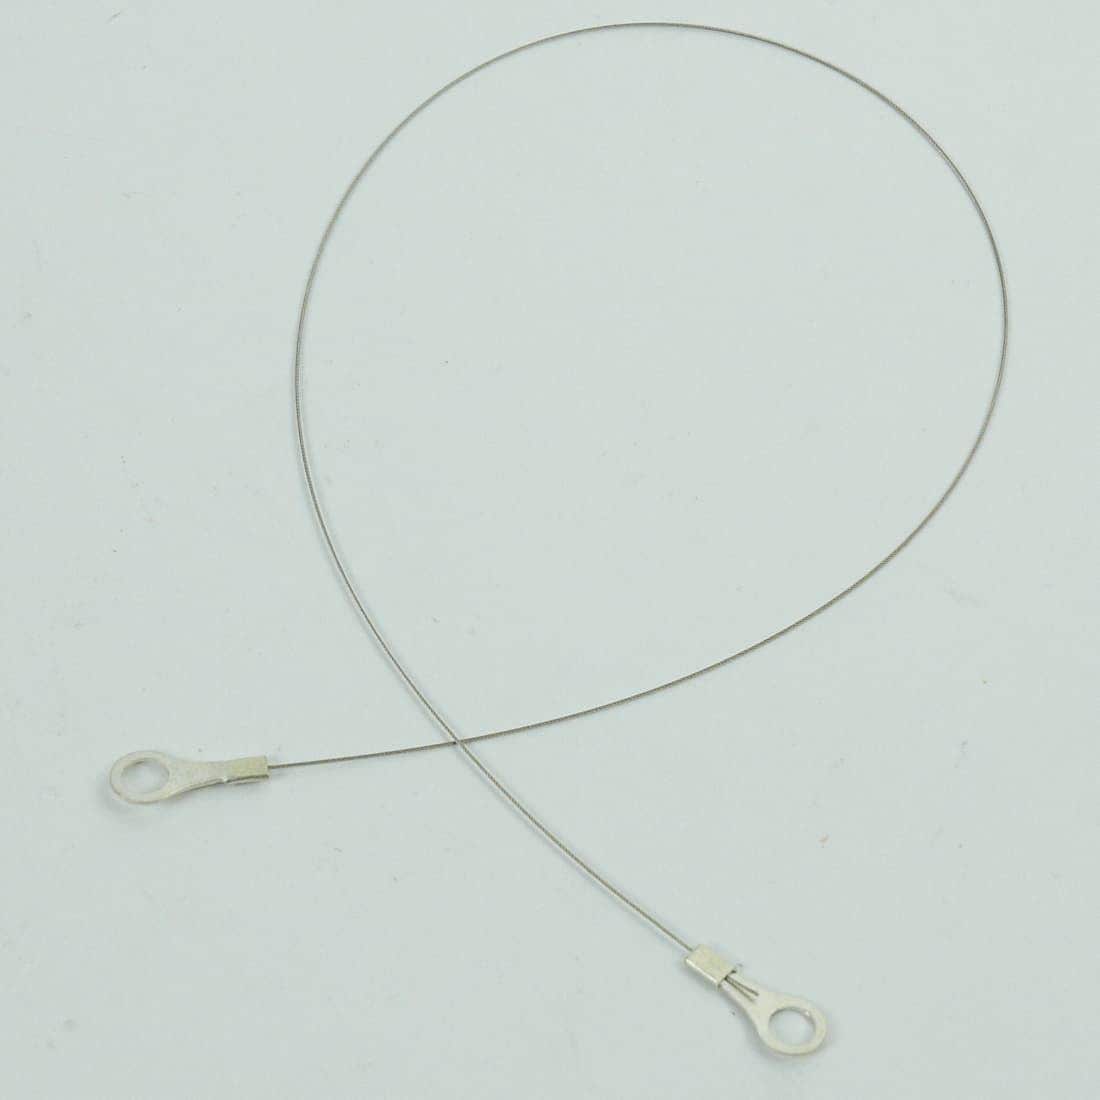 Needle Thread Adjusting Cable, Babylock #B6764-01B image # 84401